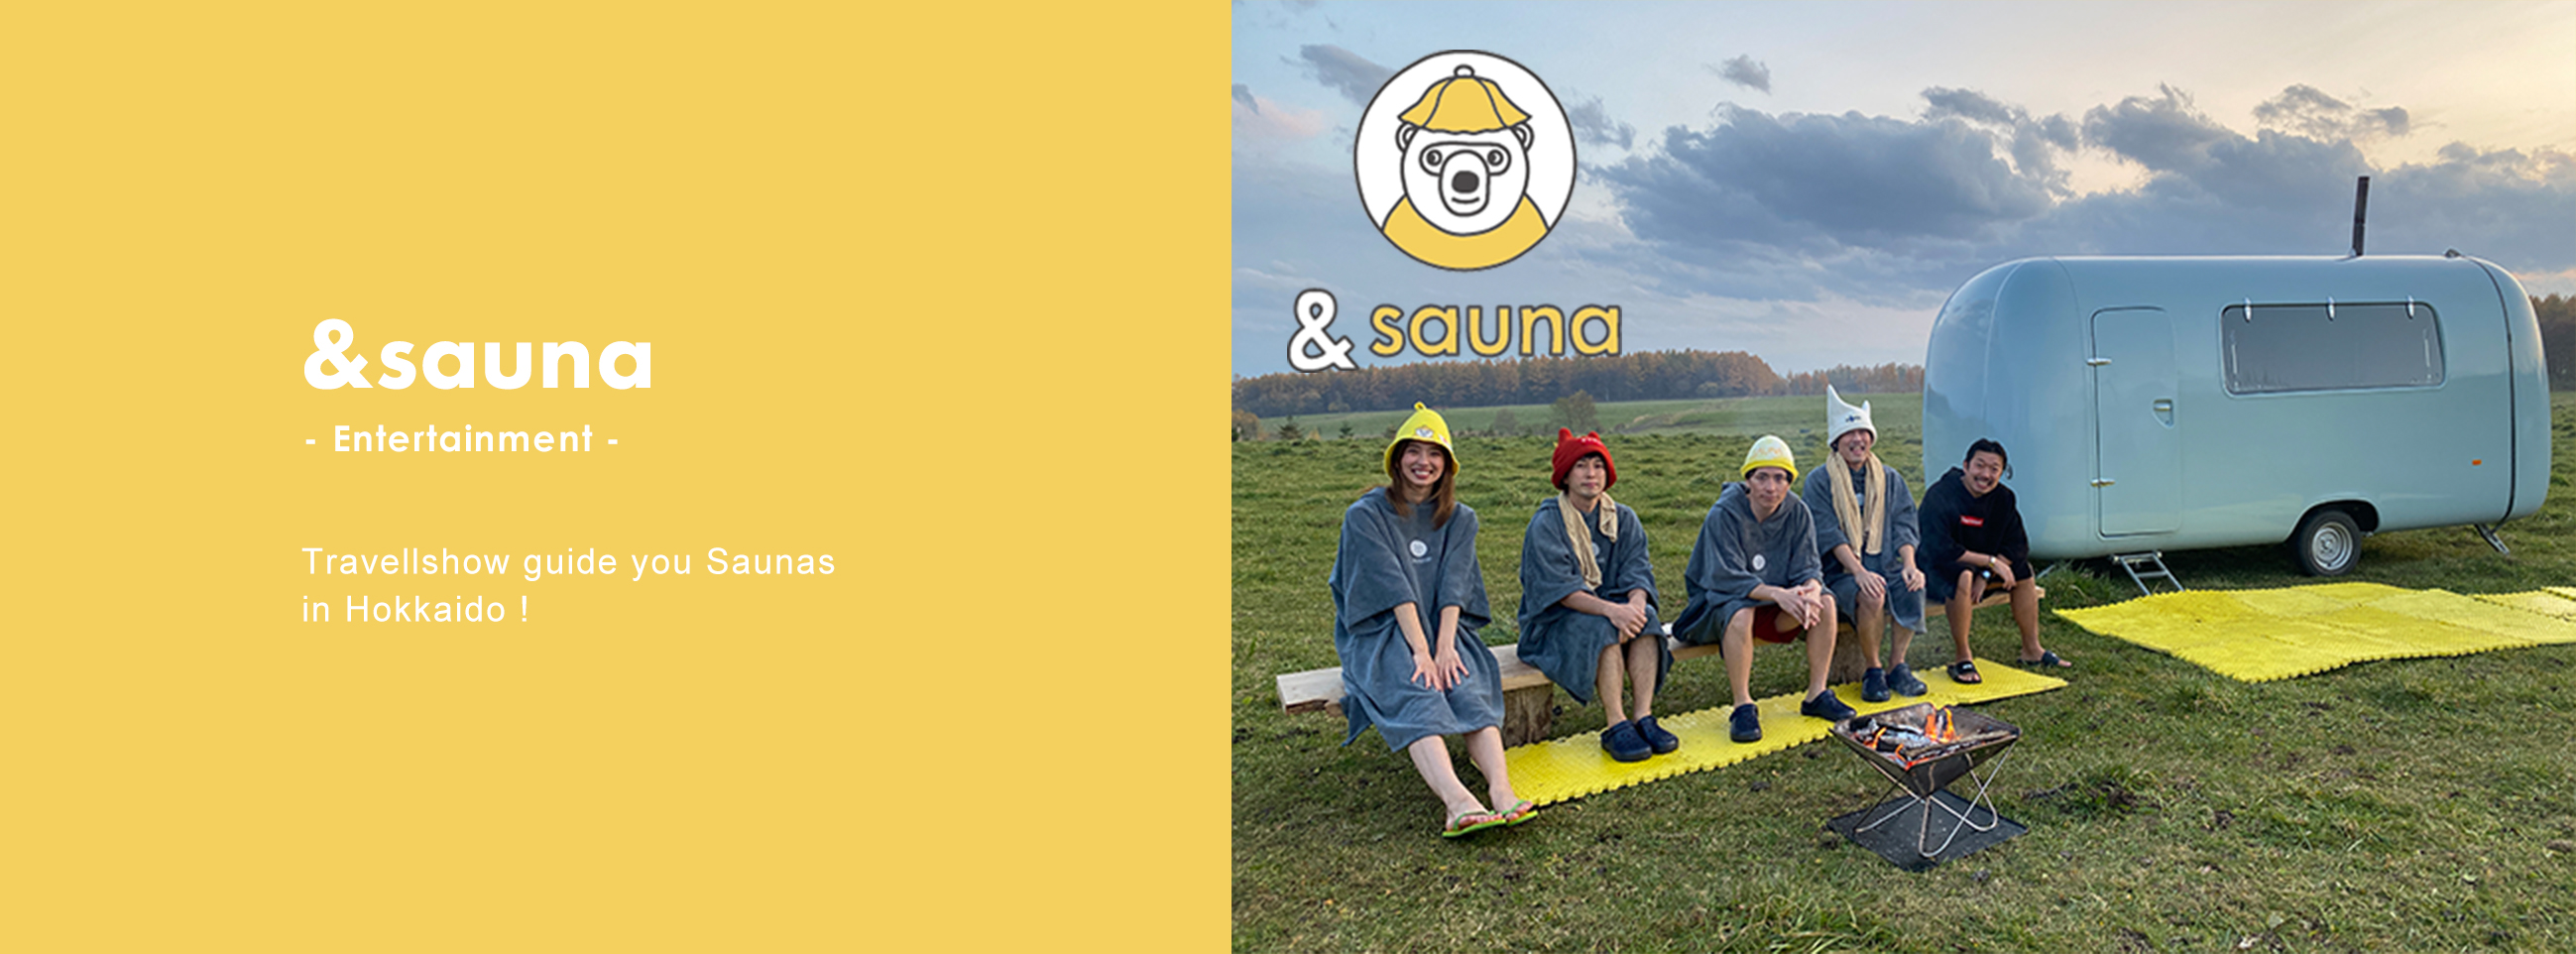 Travellshow guide you Saunas in Hokkaido!